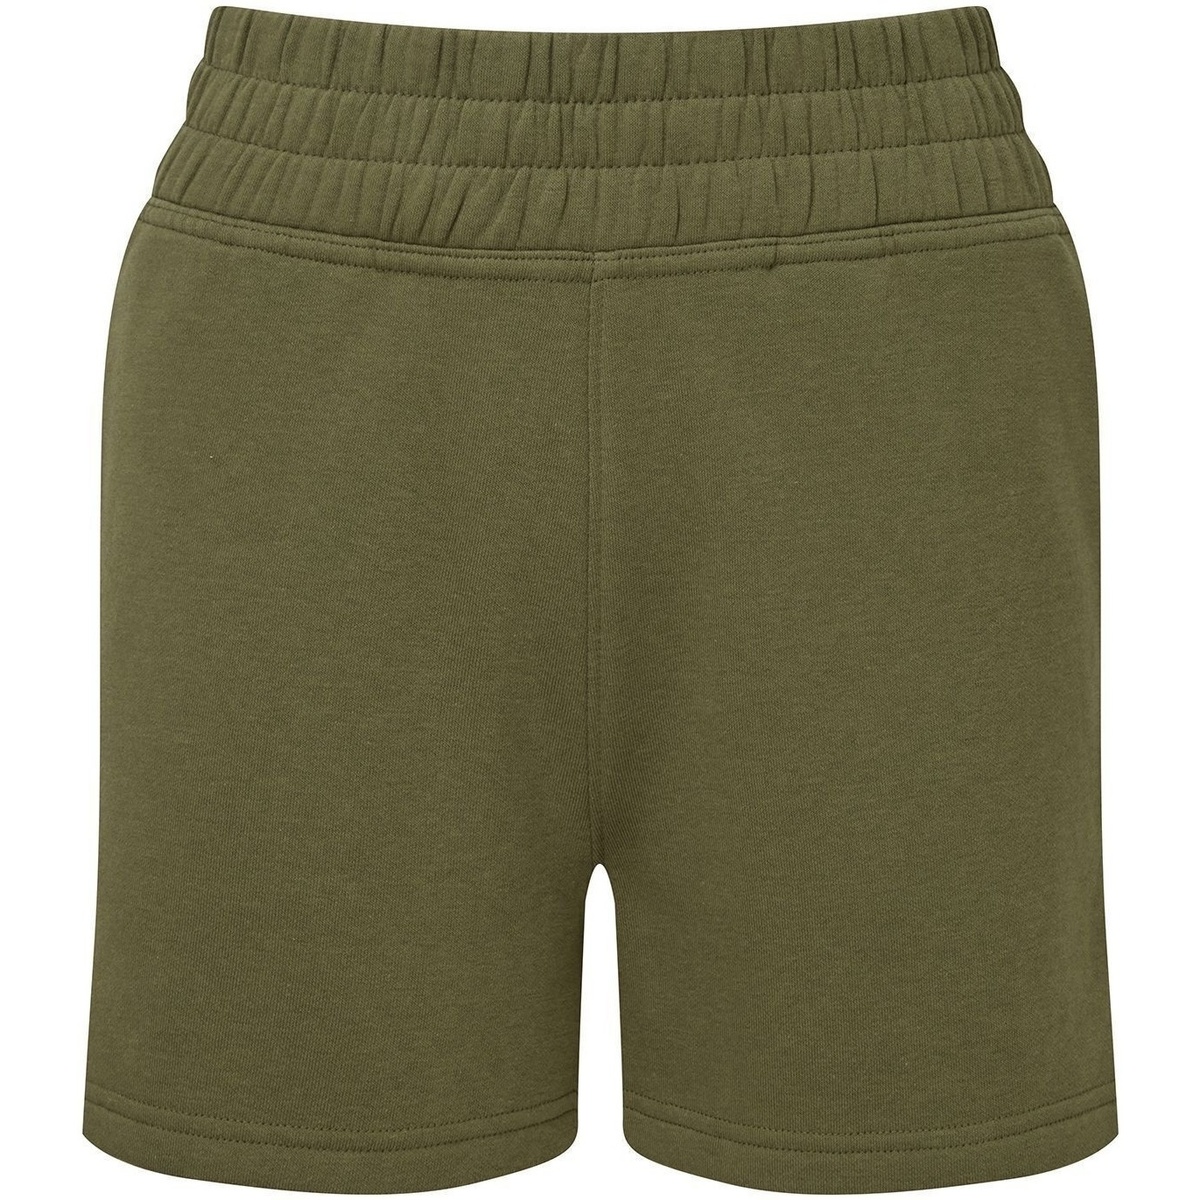 textil Mujer Shorts / Bermudas Tridri RW8179 Verde